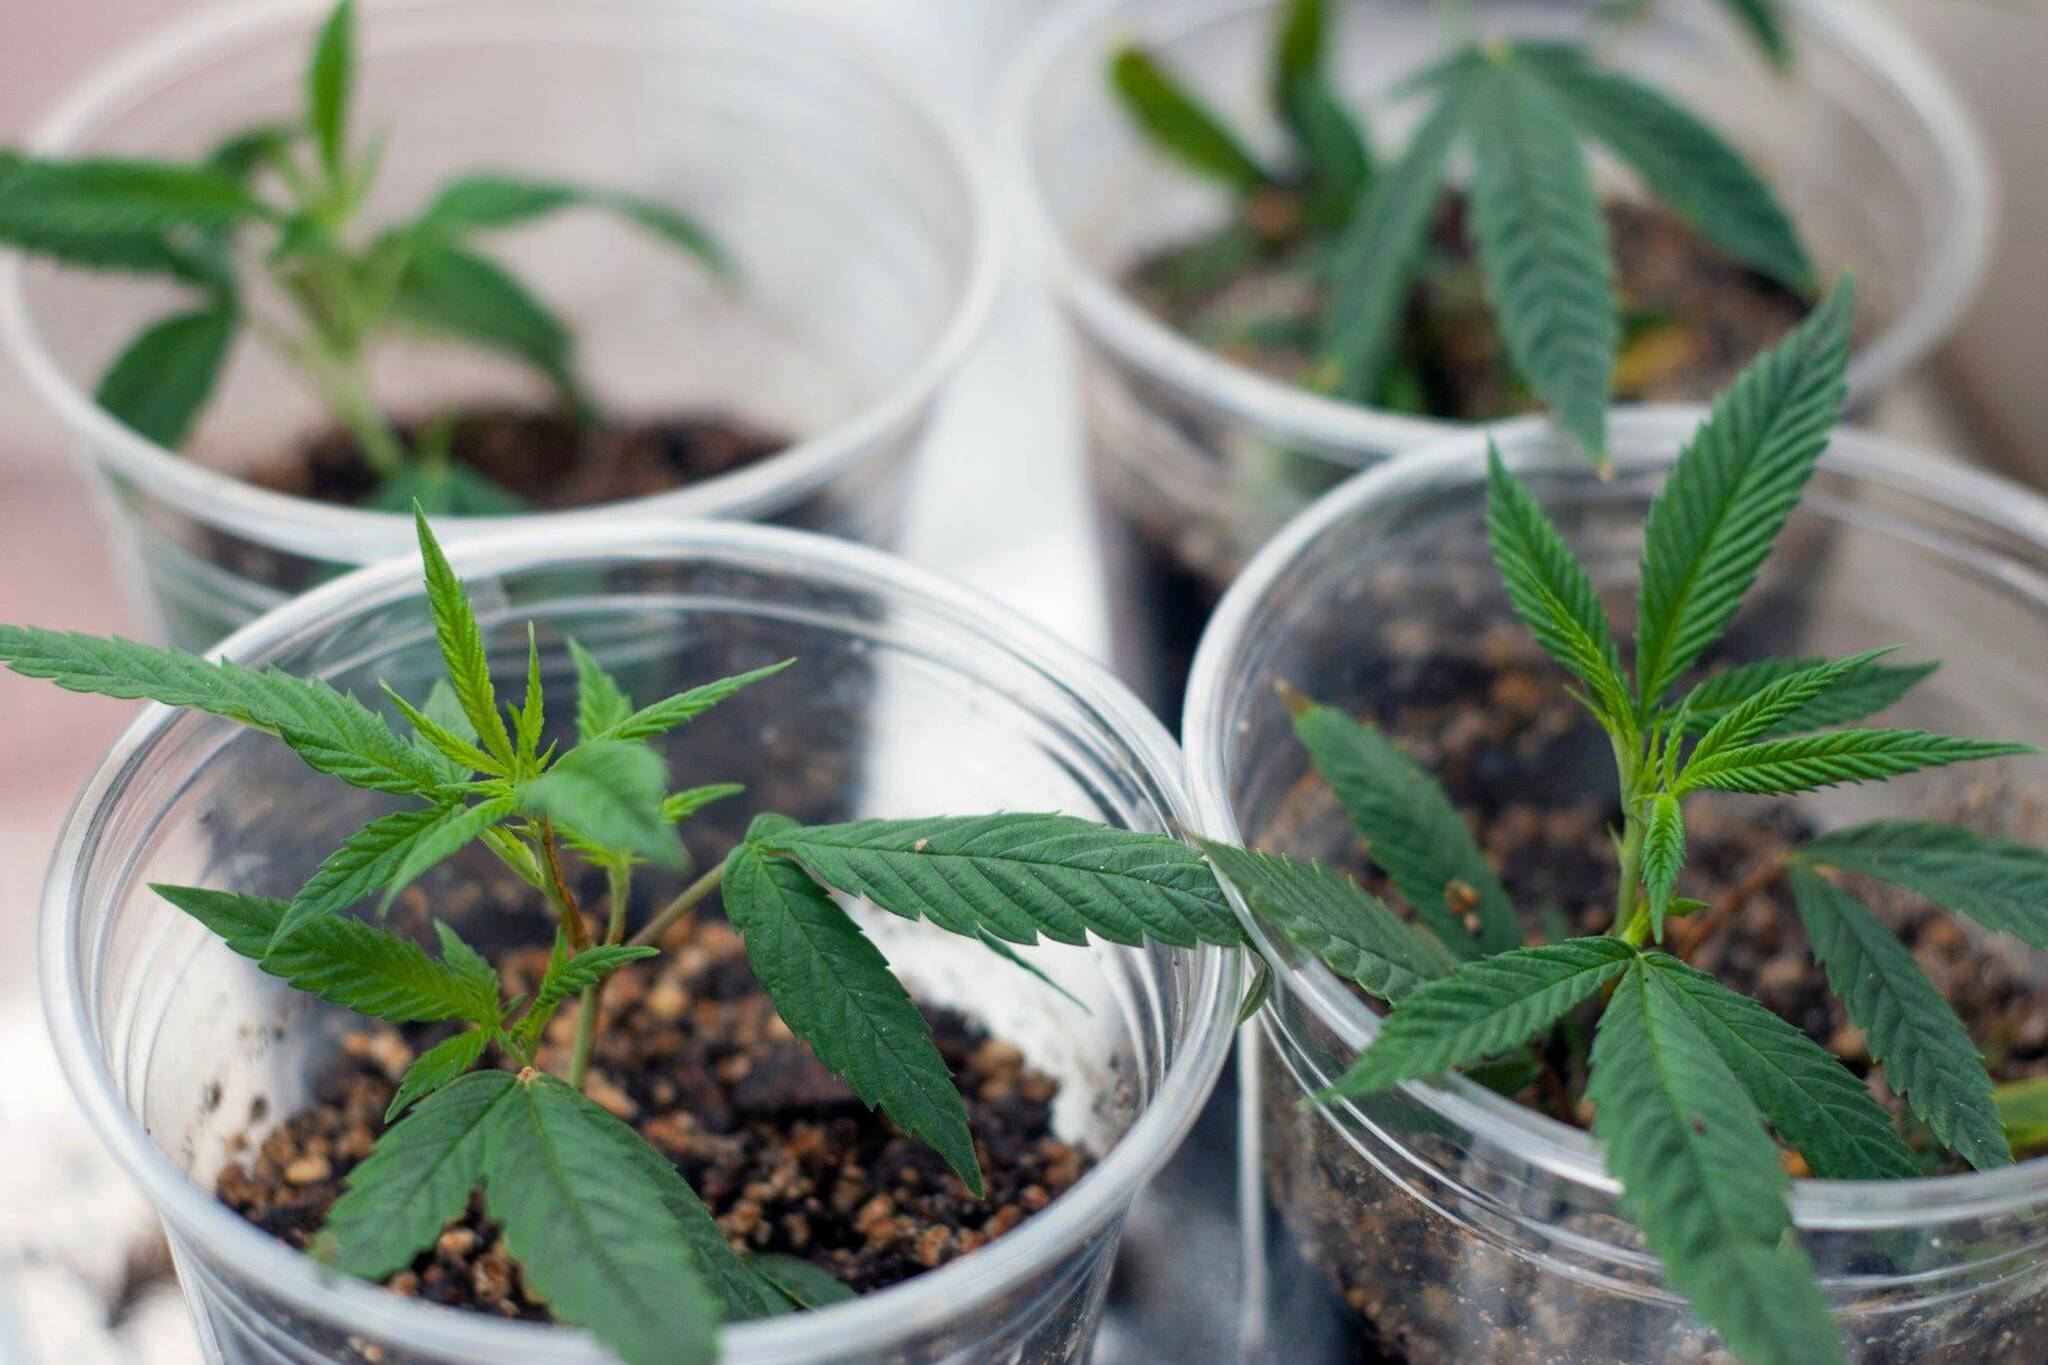 How To Grow Marijuana At Home - Cannaconnection.com